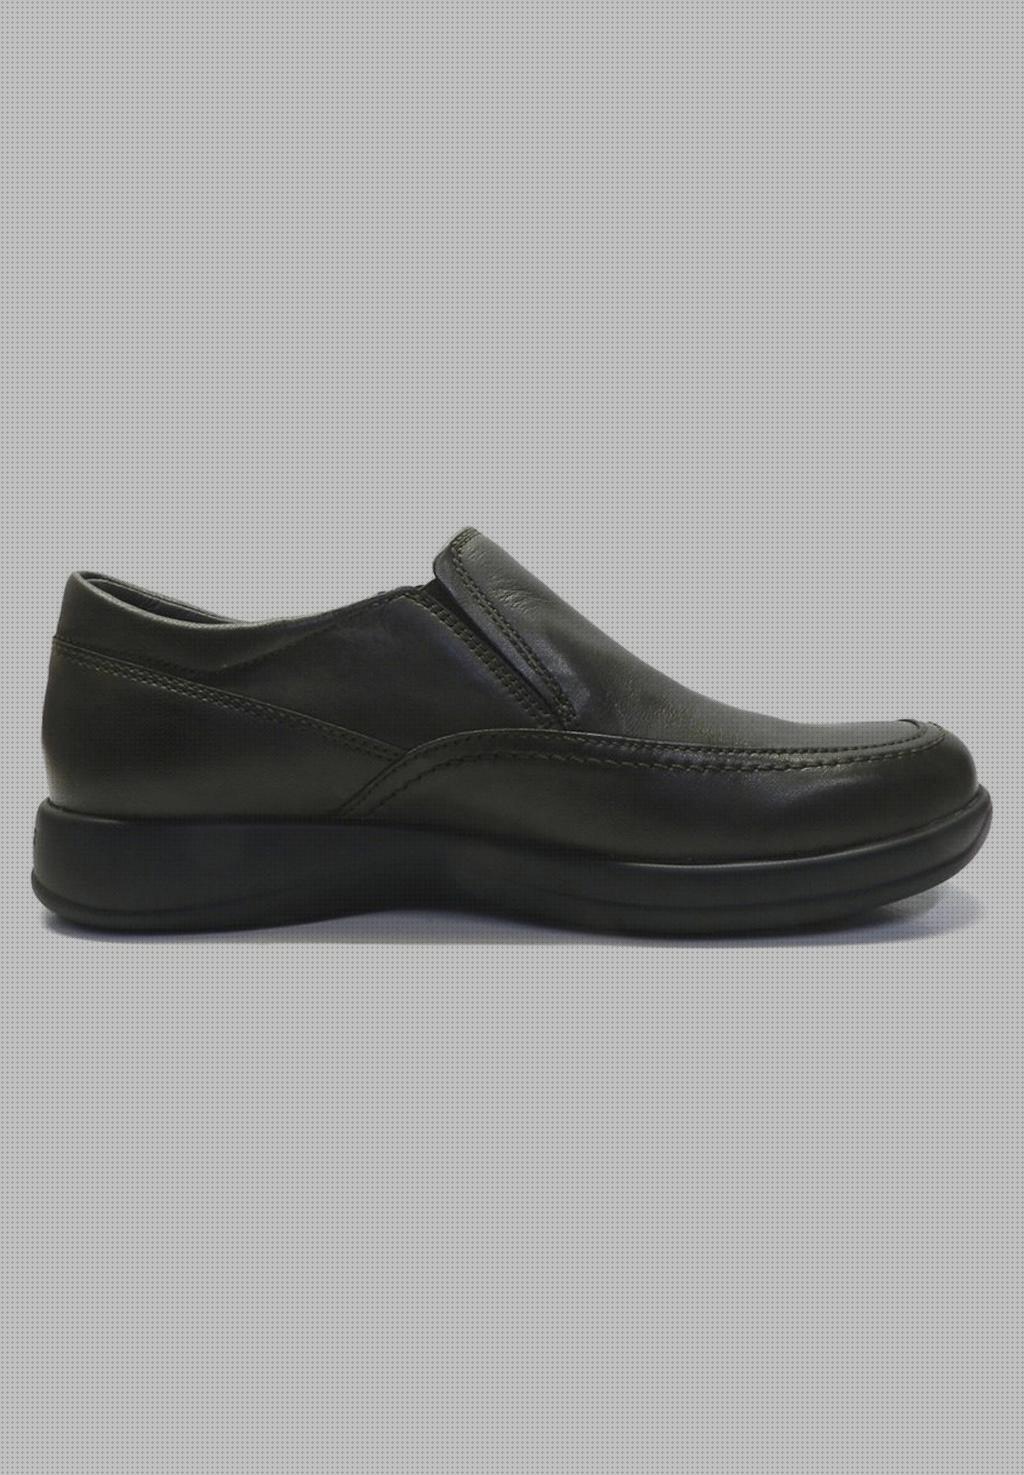 ¿Dónde poder comprar zapatos negros hombre zapatos zapatos mocasines de hombre de stonefly negros de piel?